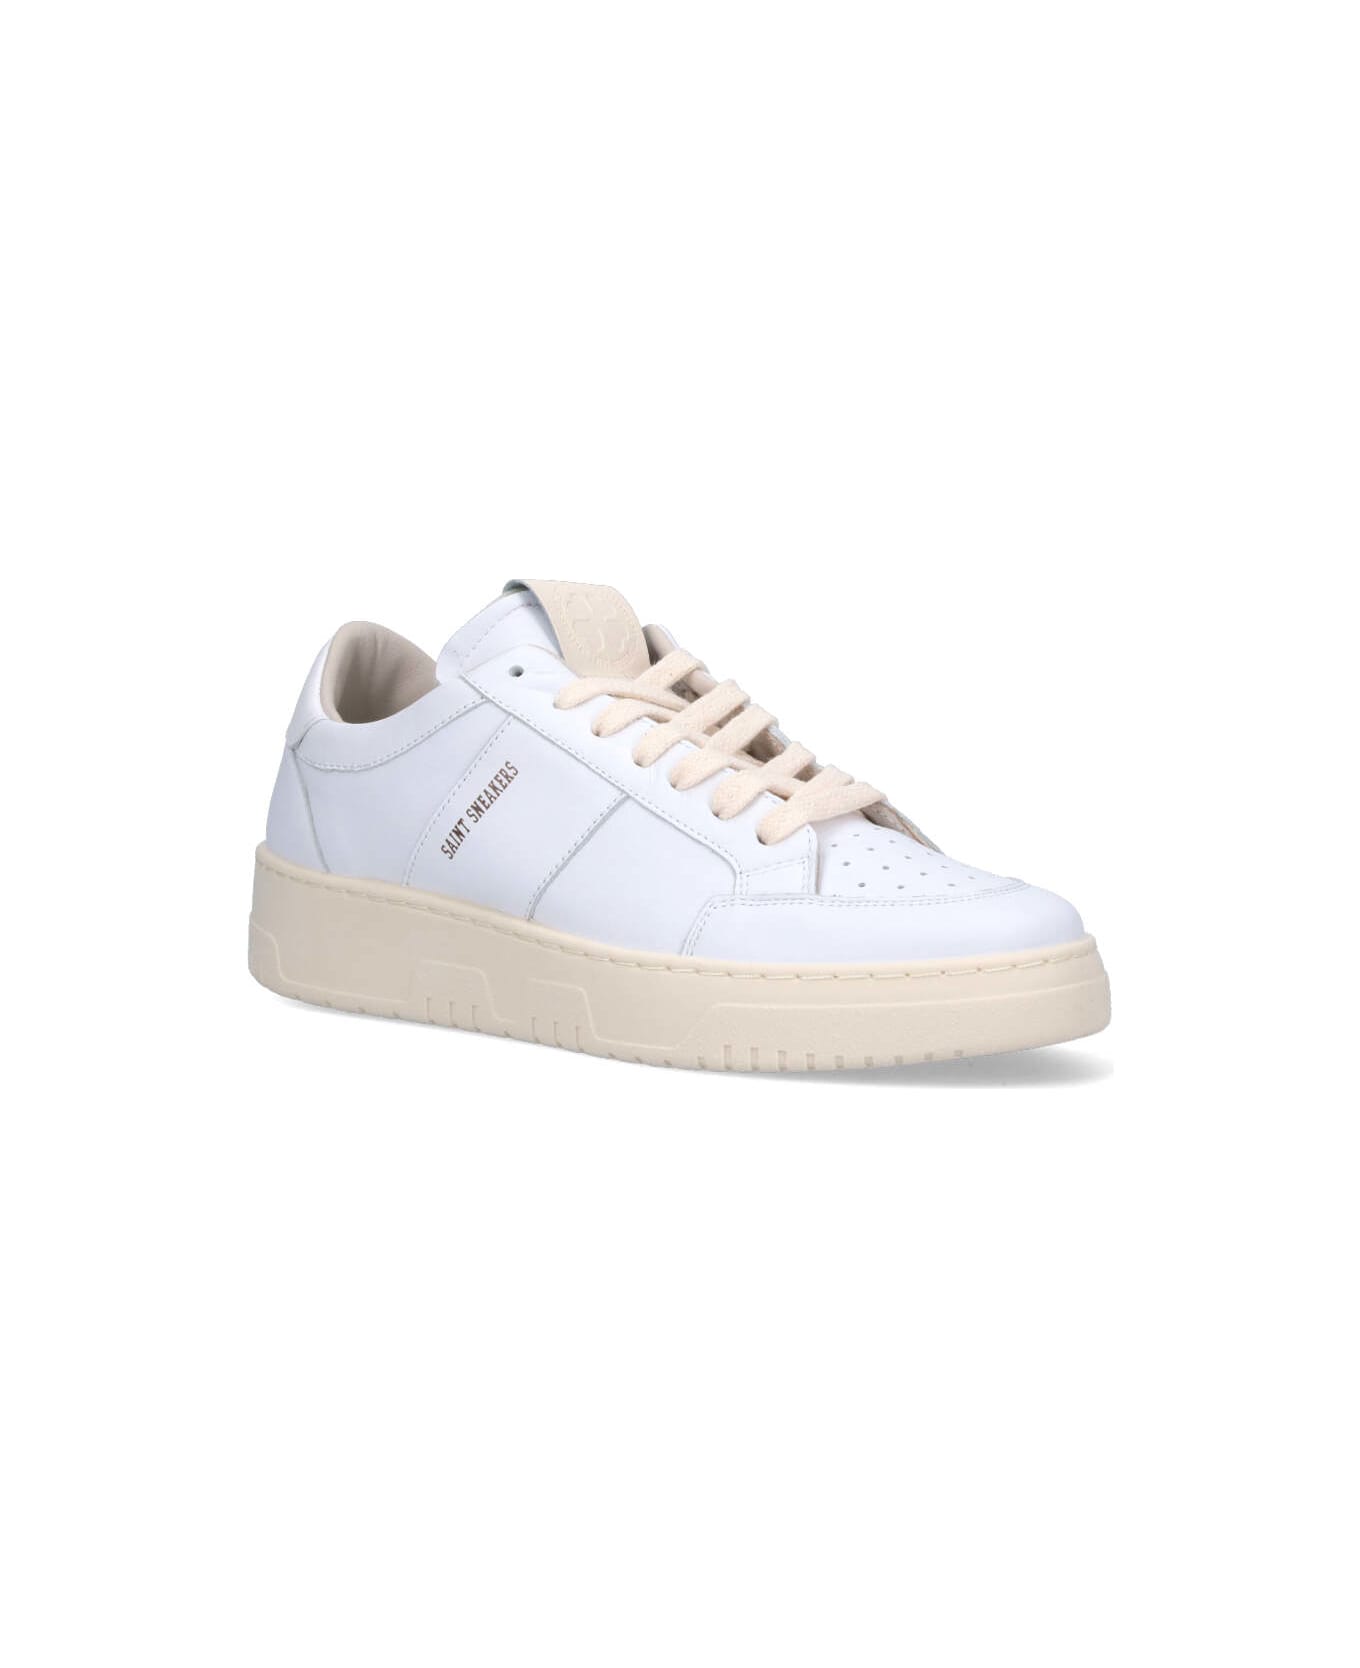 Saint Sneakers "golf" Sneakers - White